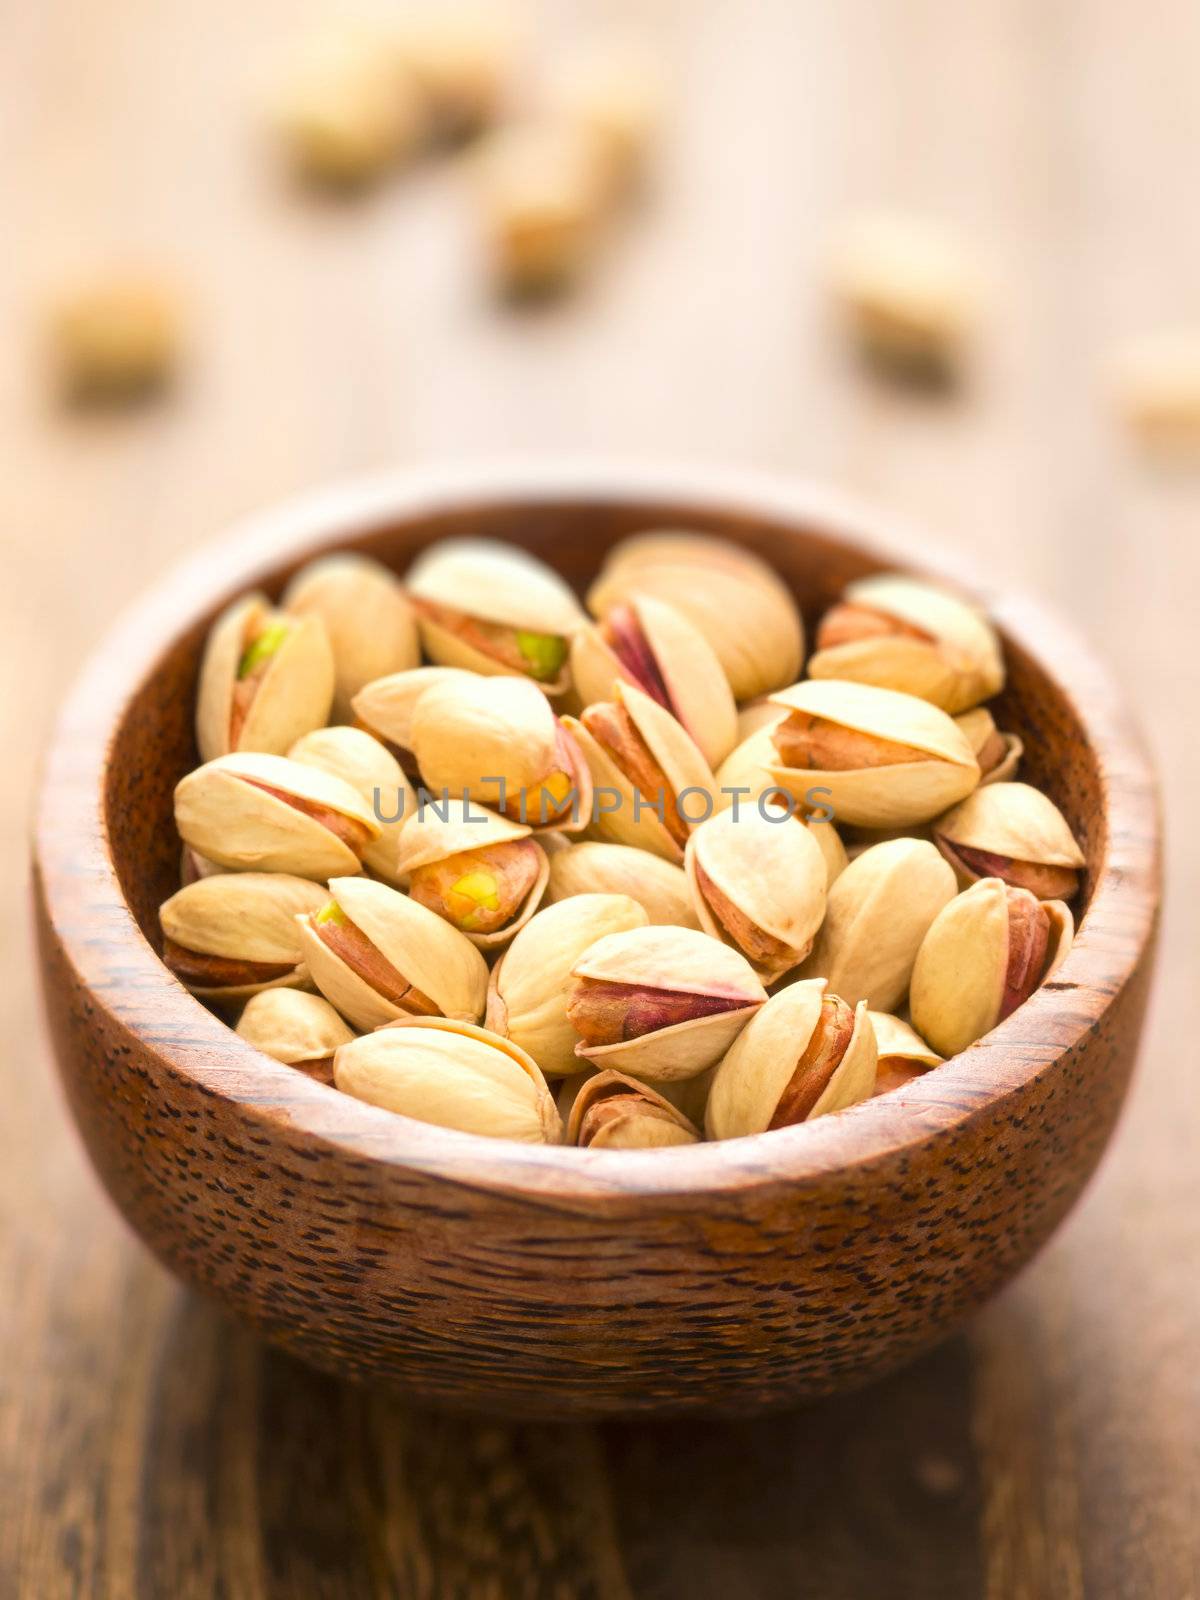 pistachio nuts by zkruger